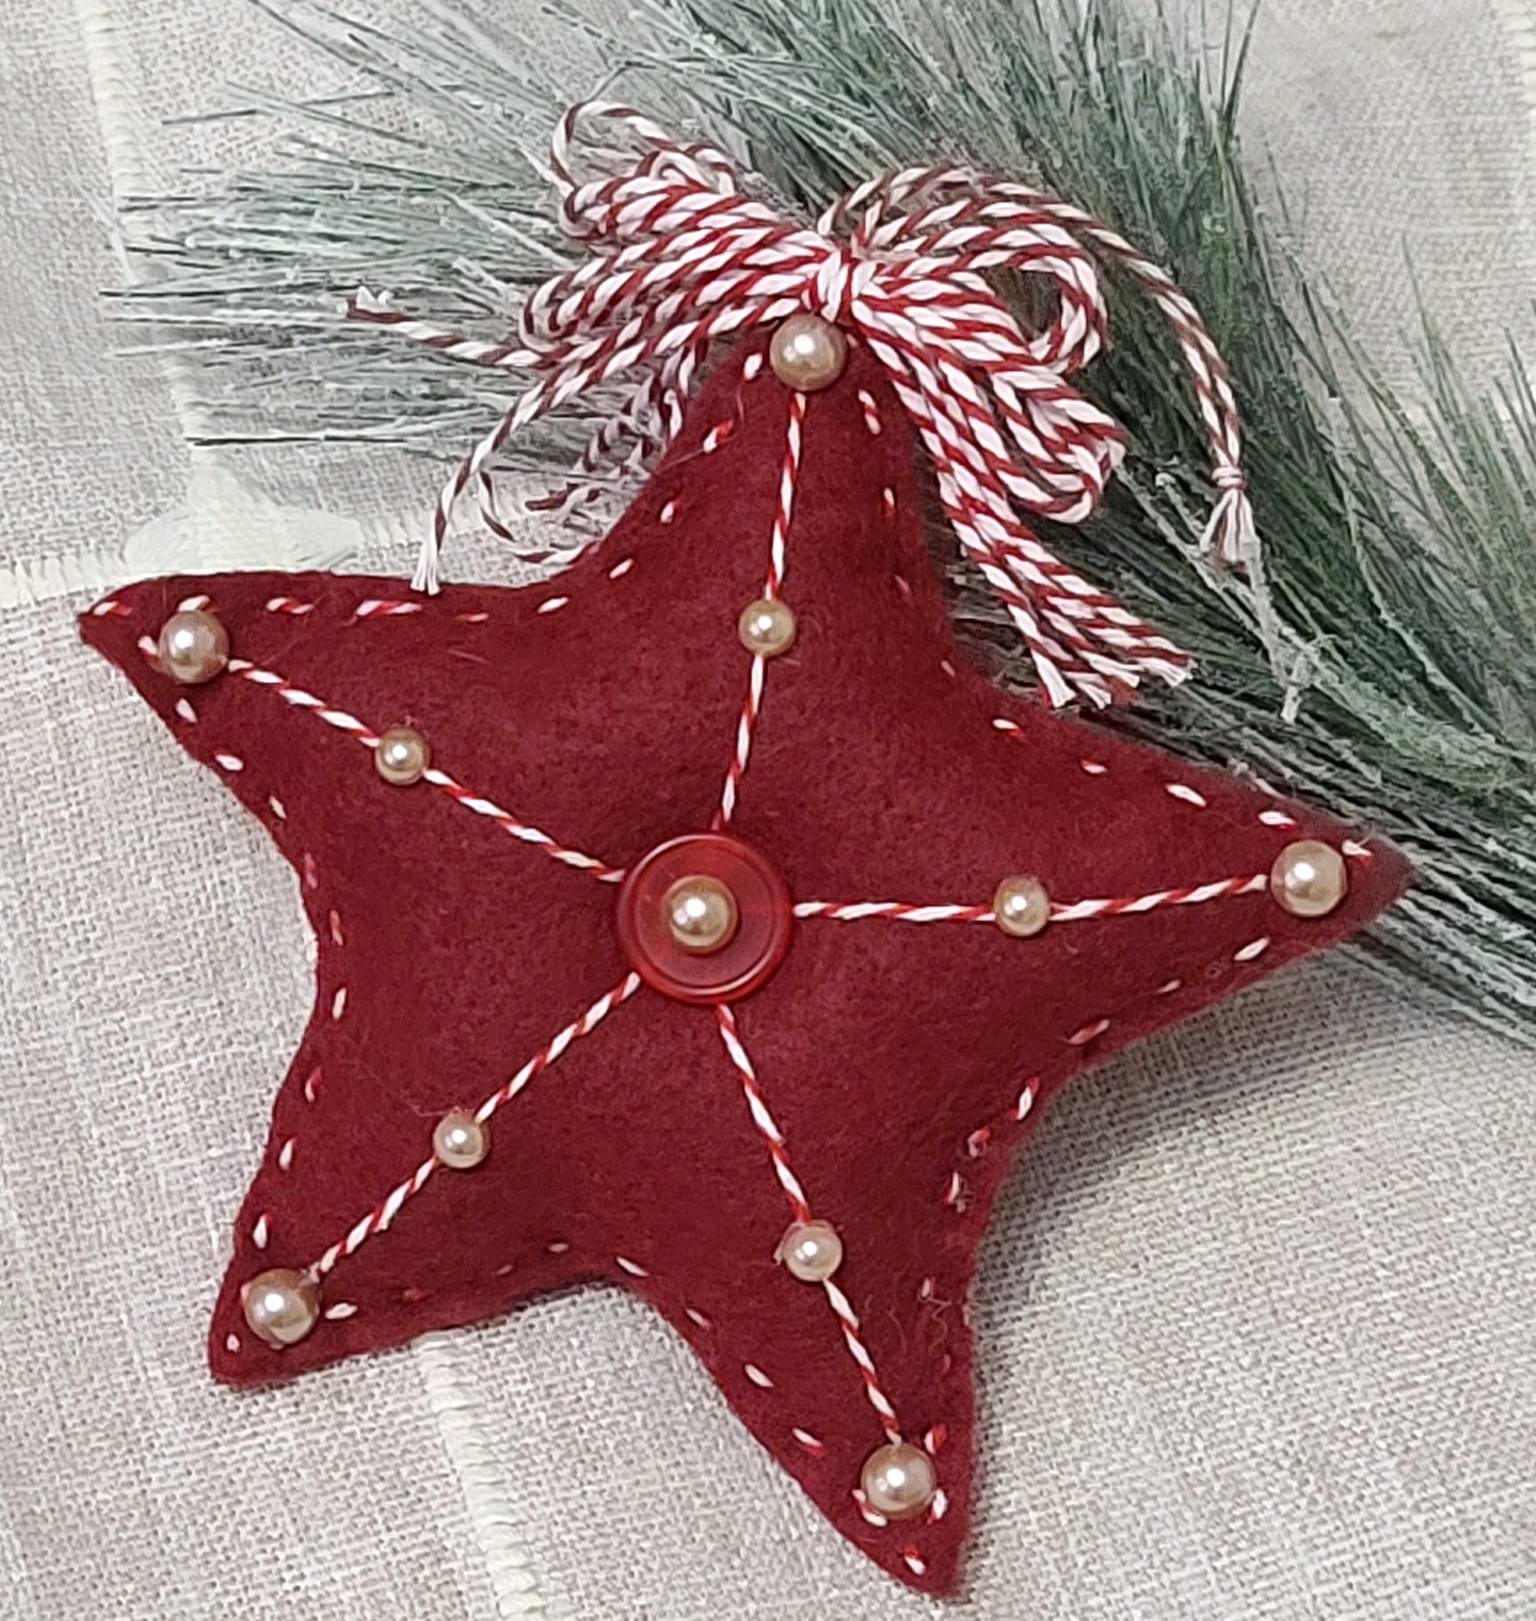 Burgundy Red Stars 2-sided 4 3/4" x 4 3/4" Star Ornament